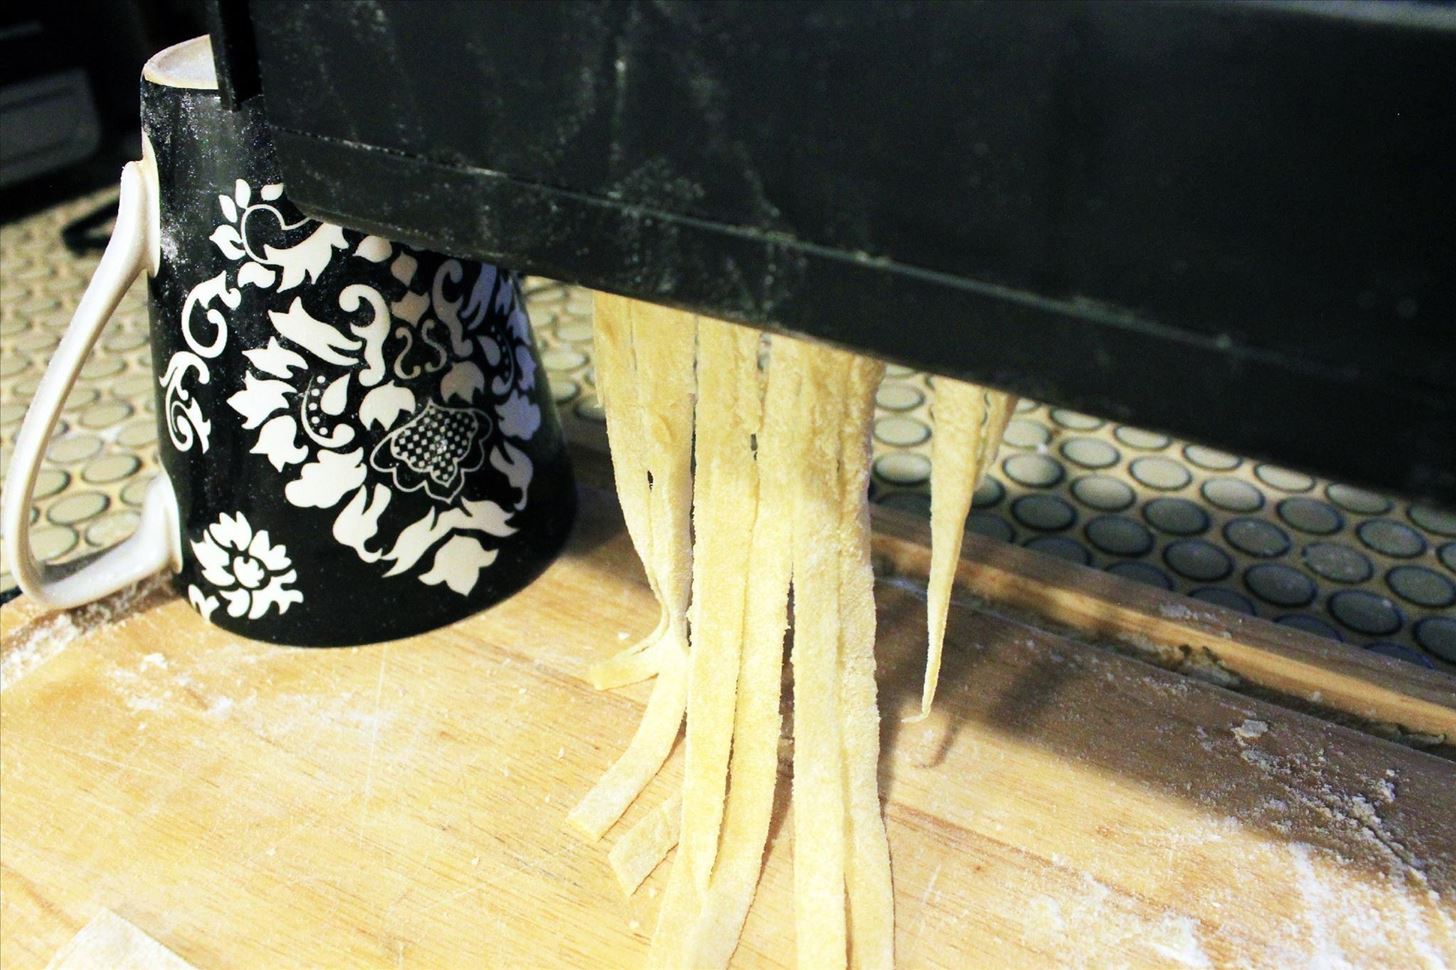 No Pasta Maker? Use Your Paper Shredder for Homemade Noodles Instead